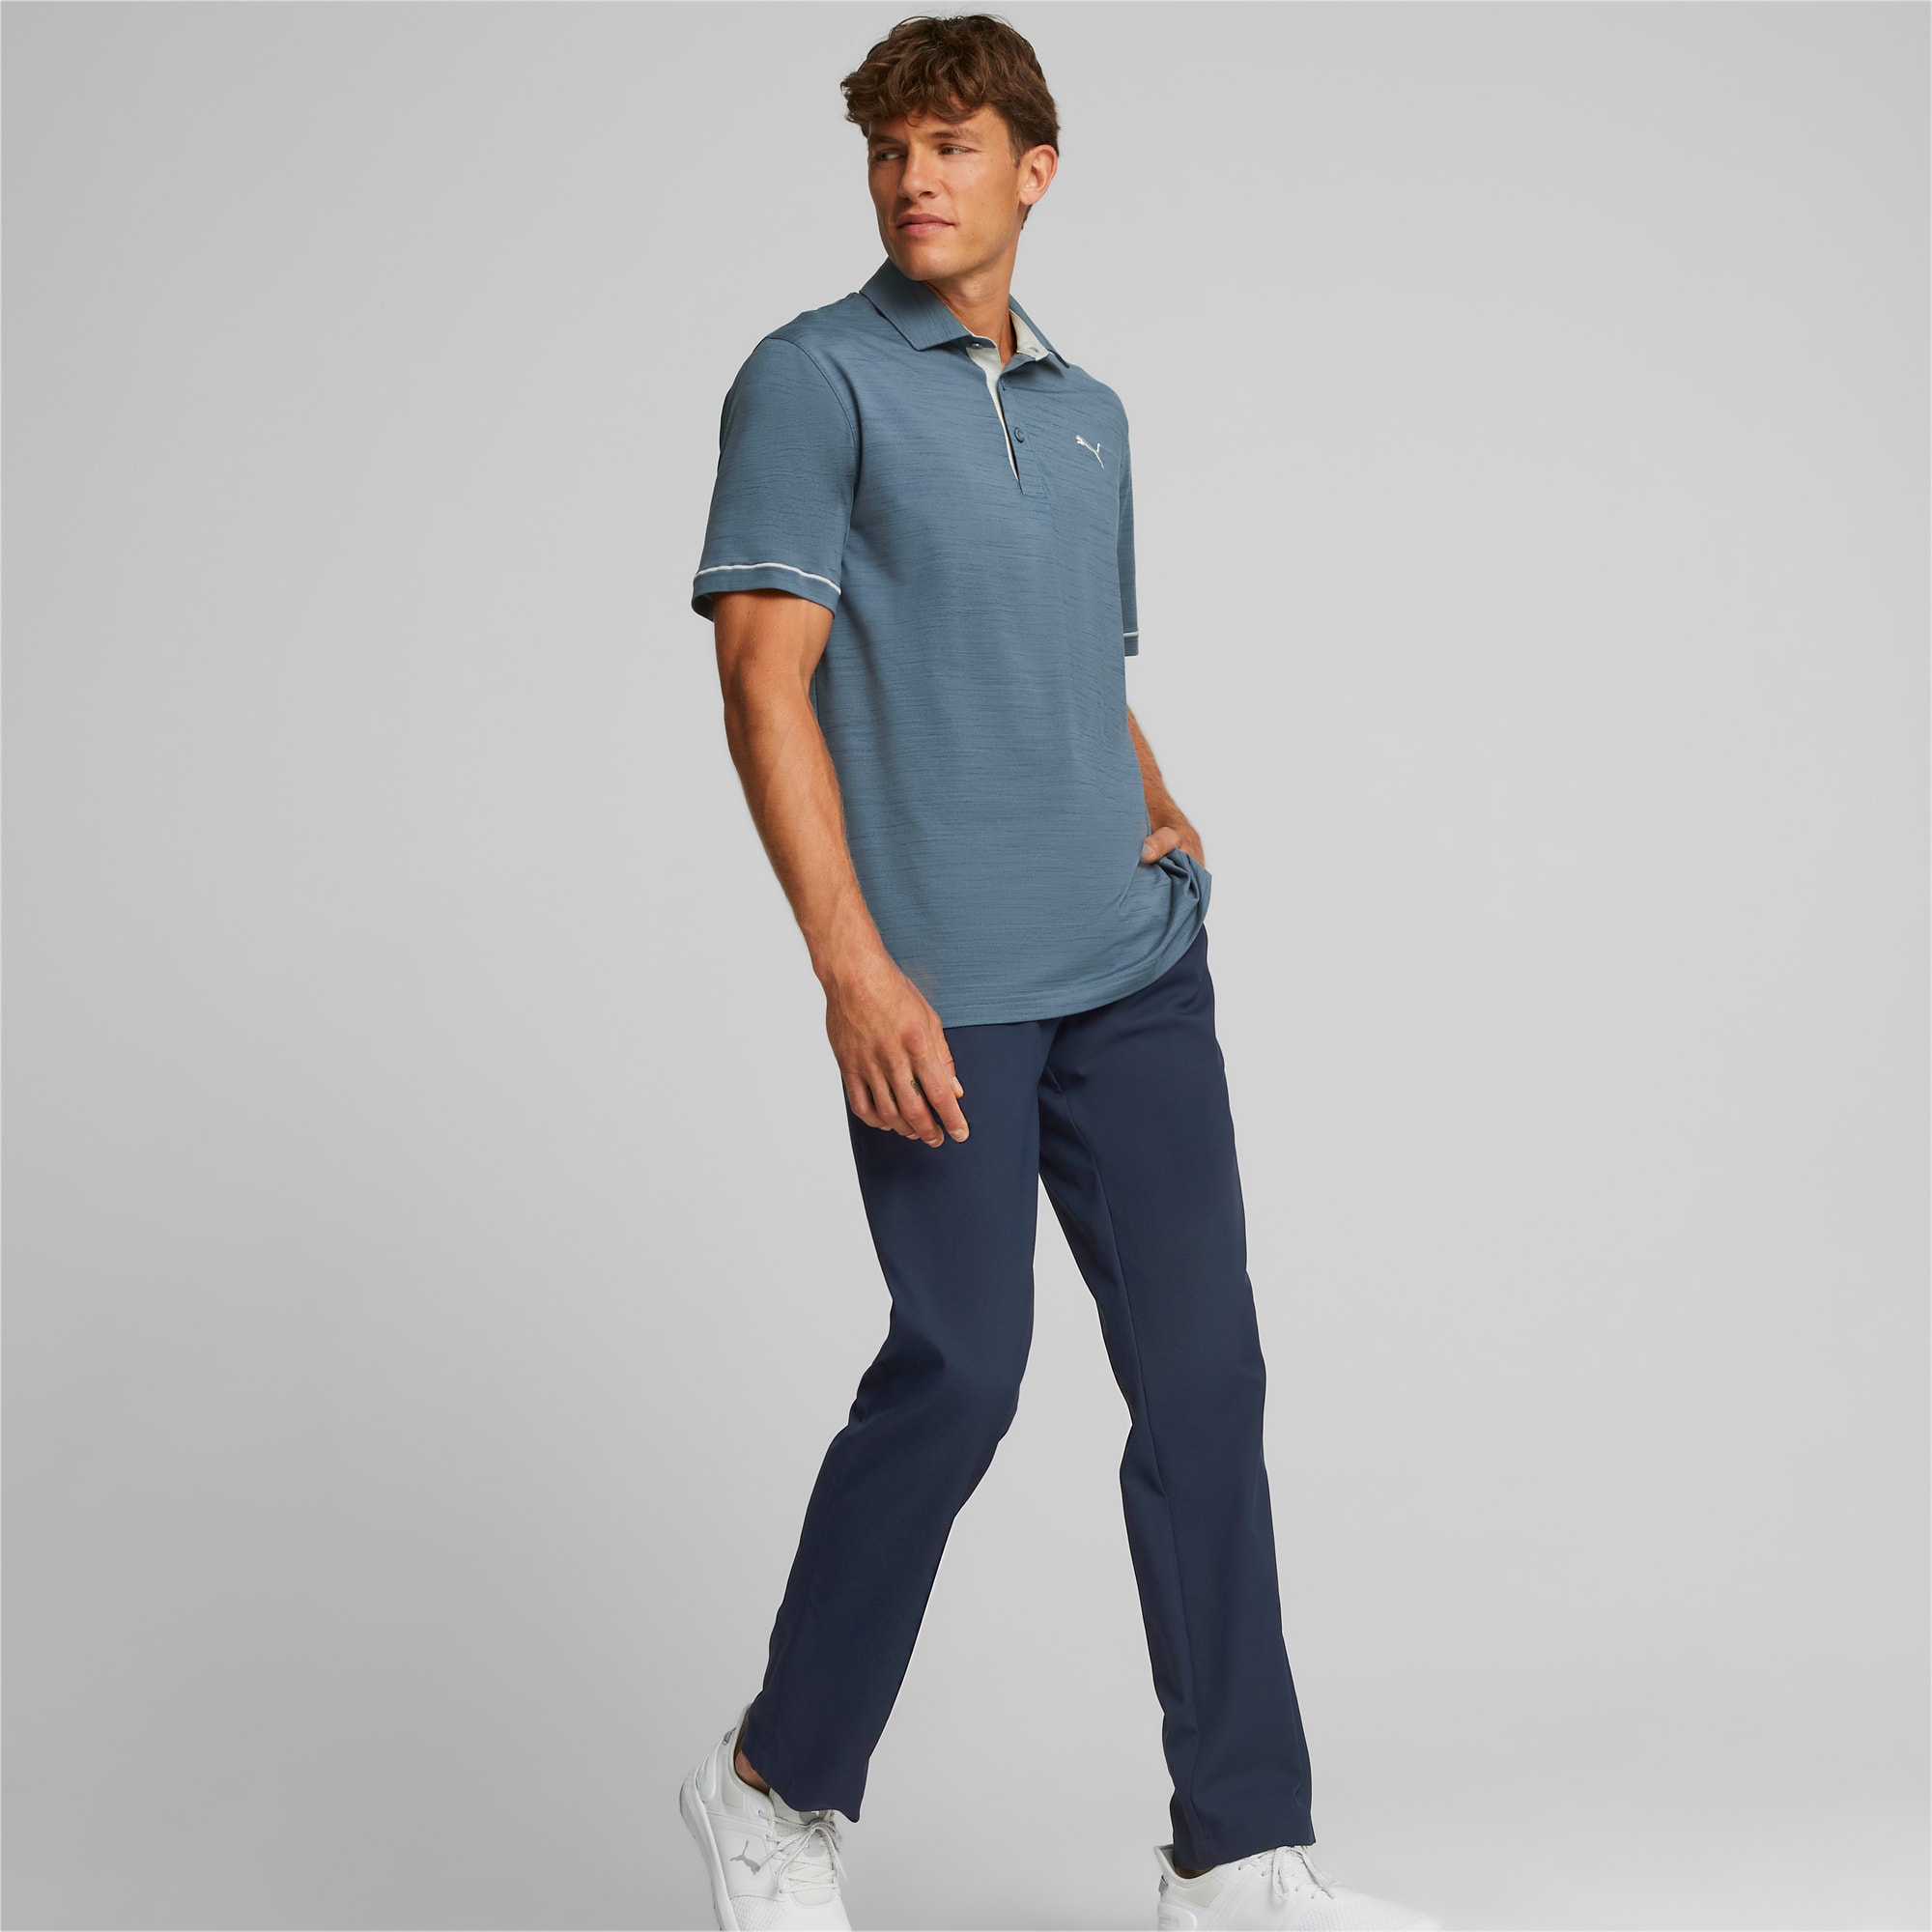 PUMA Dealer Golf Pants Men, Dark Blue, Size 36/32, Clothing